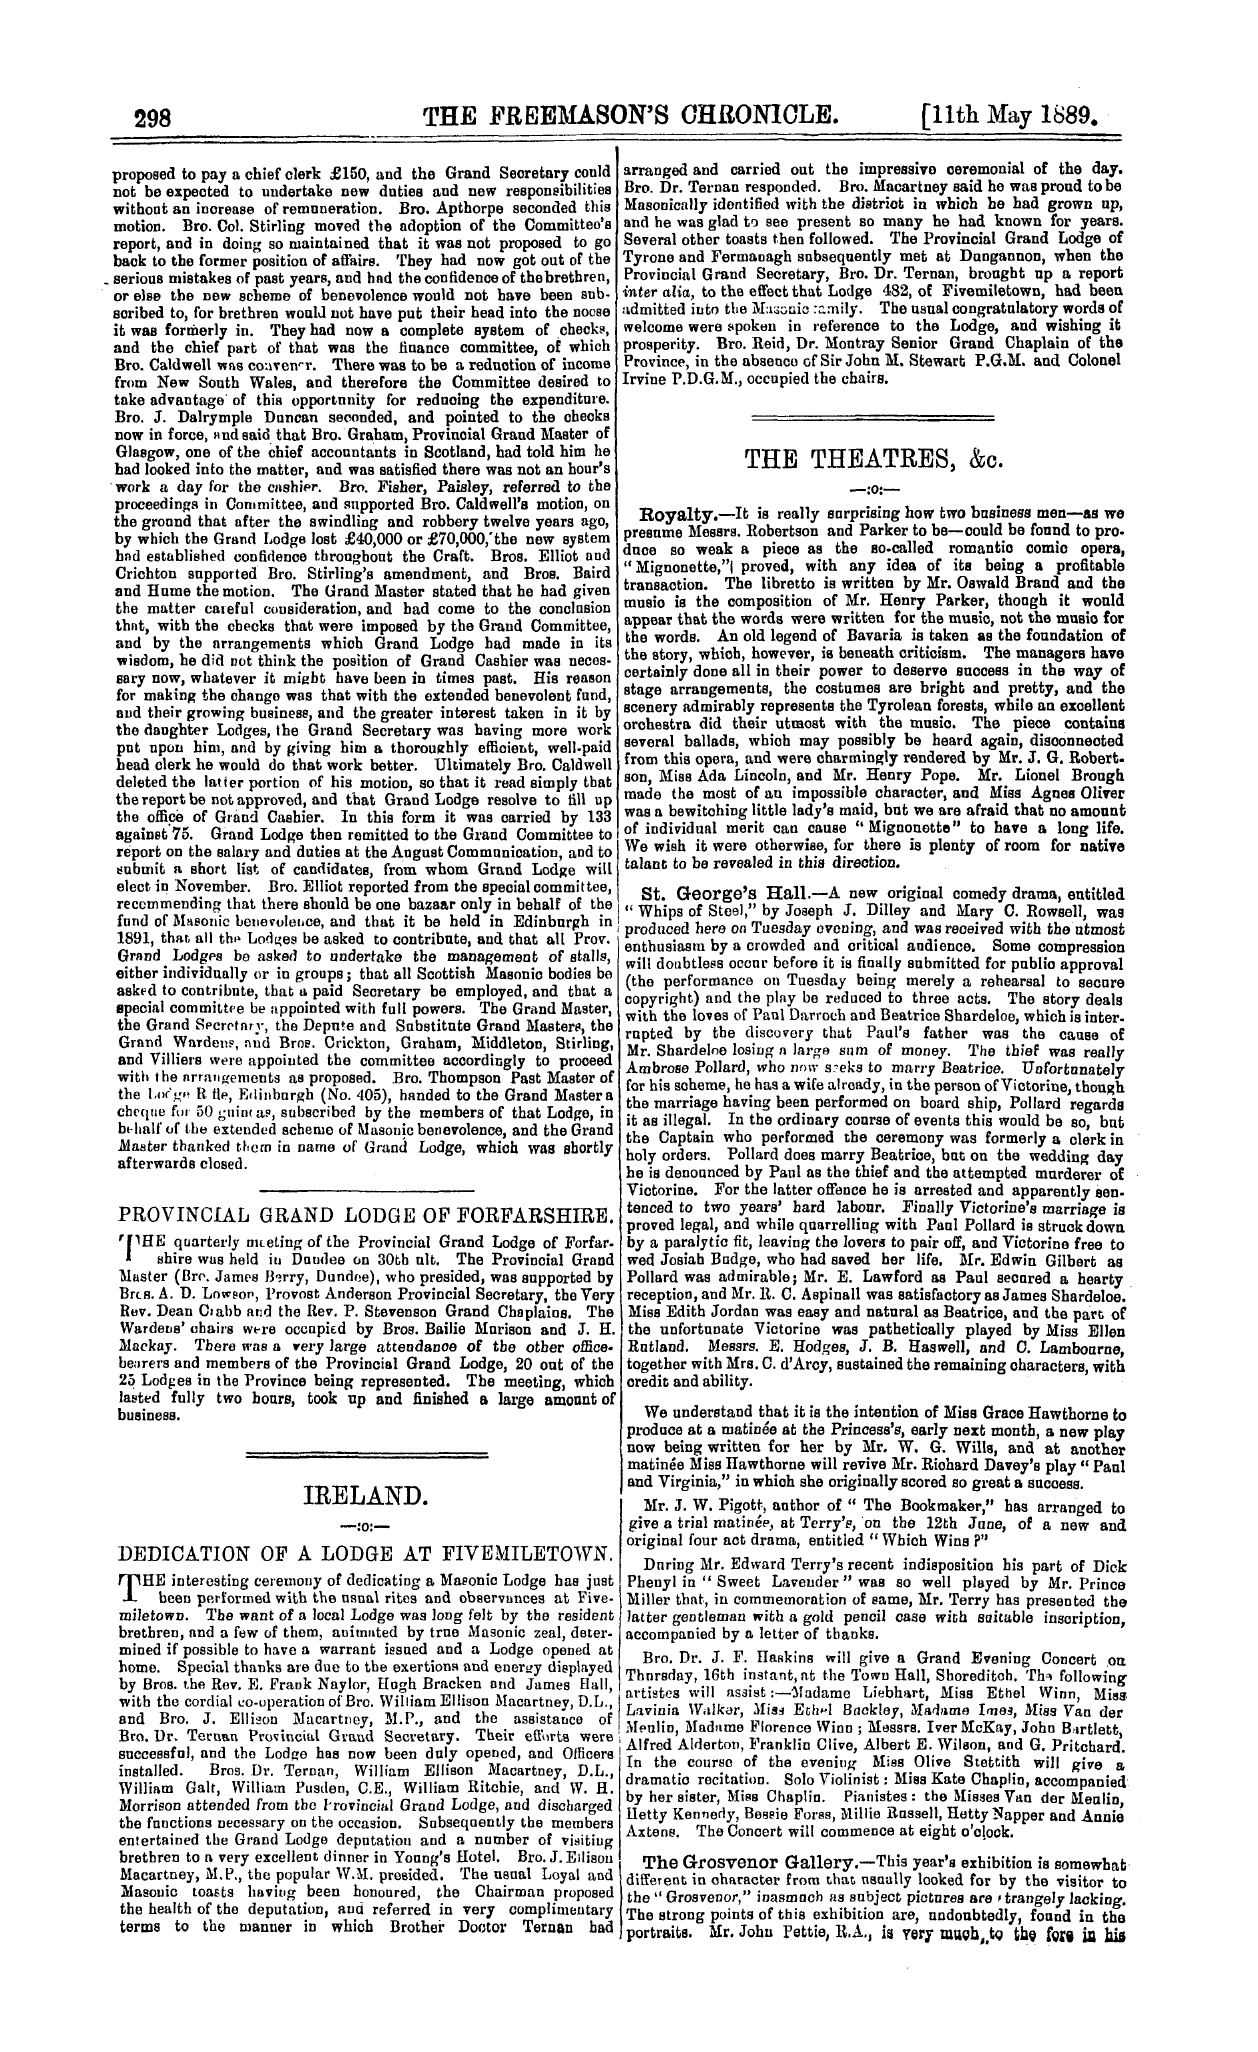 The Freemason's Chronicle: 1889-05-11 - Scotland.